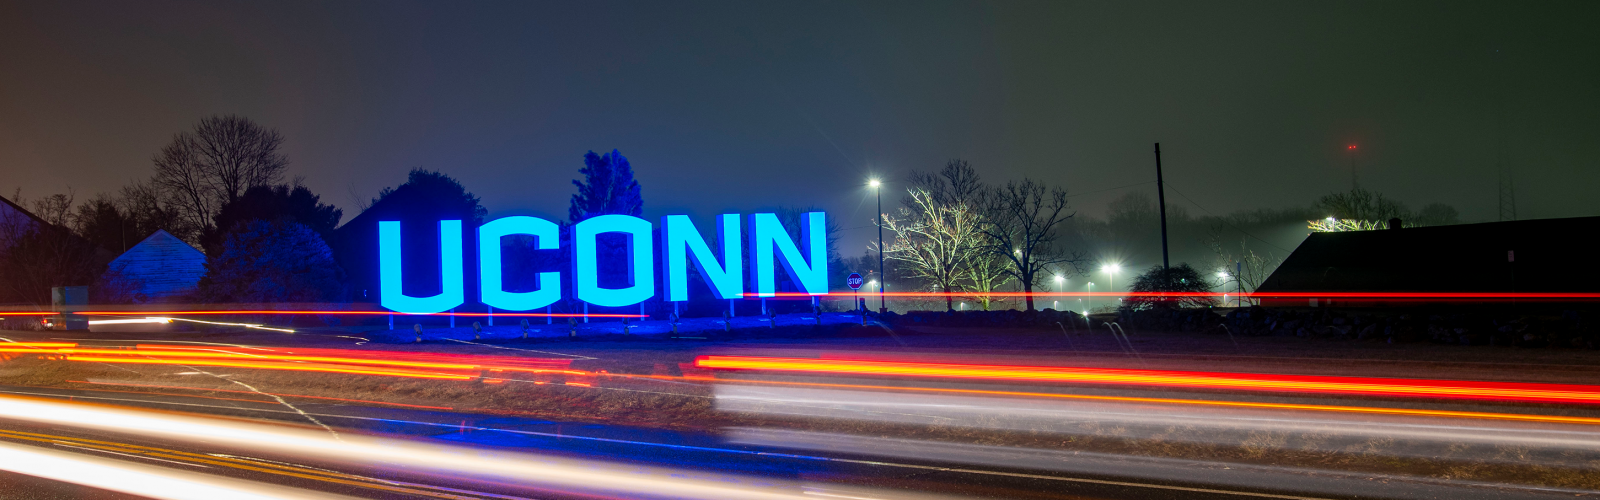 UConn sign at night